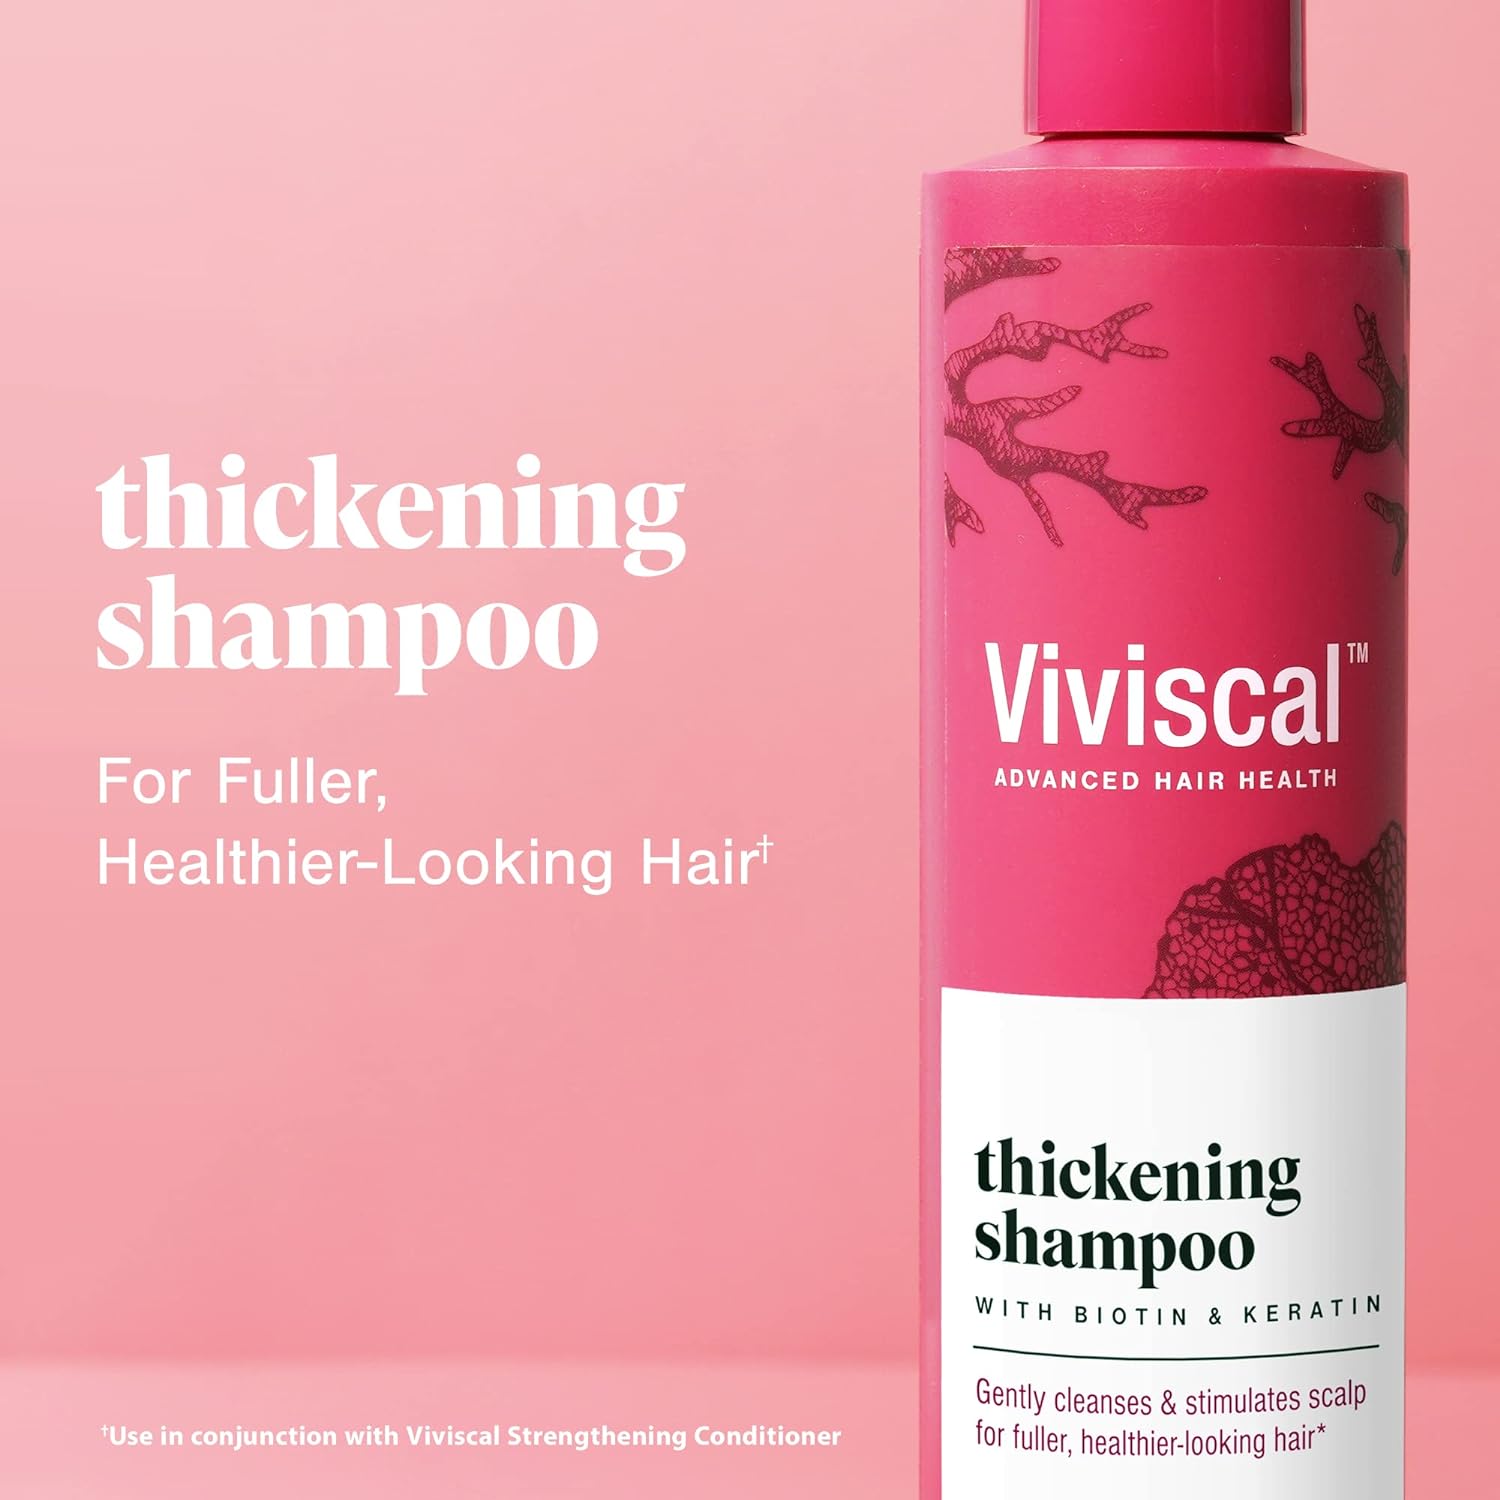 Viviscal hair thickening shampoo for fuller, healthier-looking hair